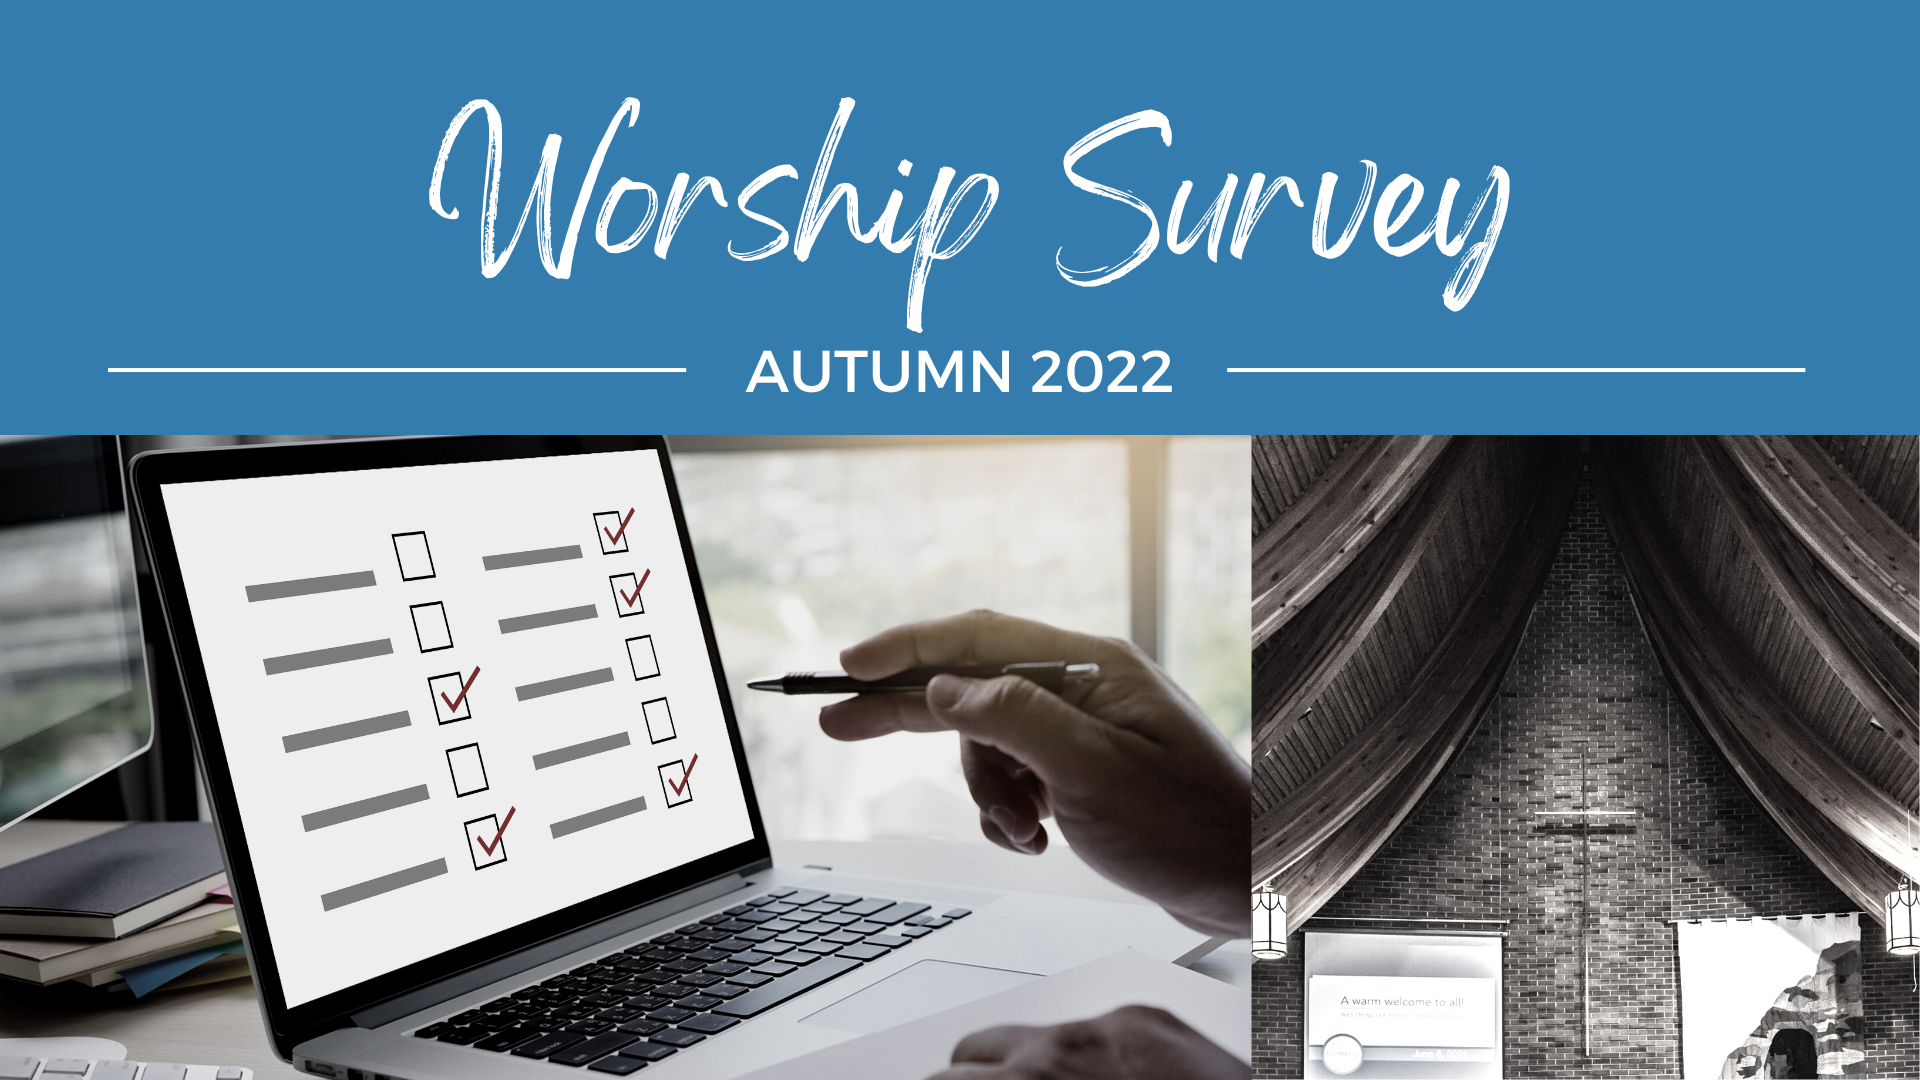 Westminster Worship Survey - Autumn 2022